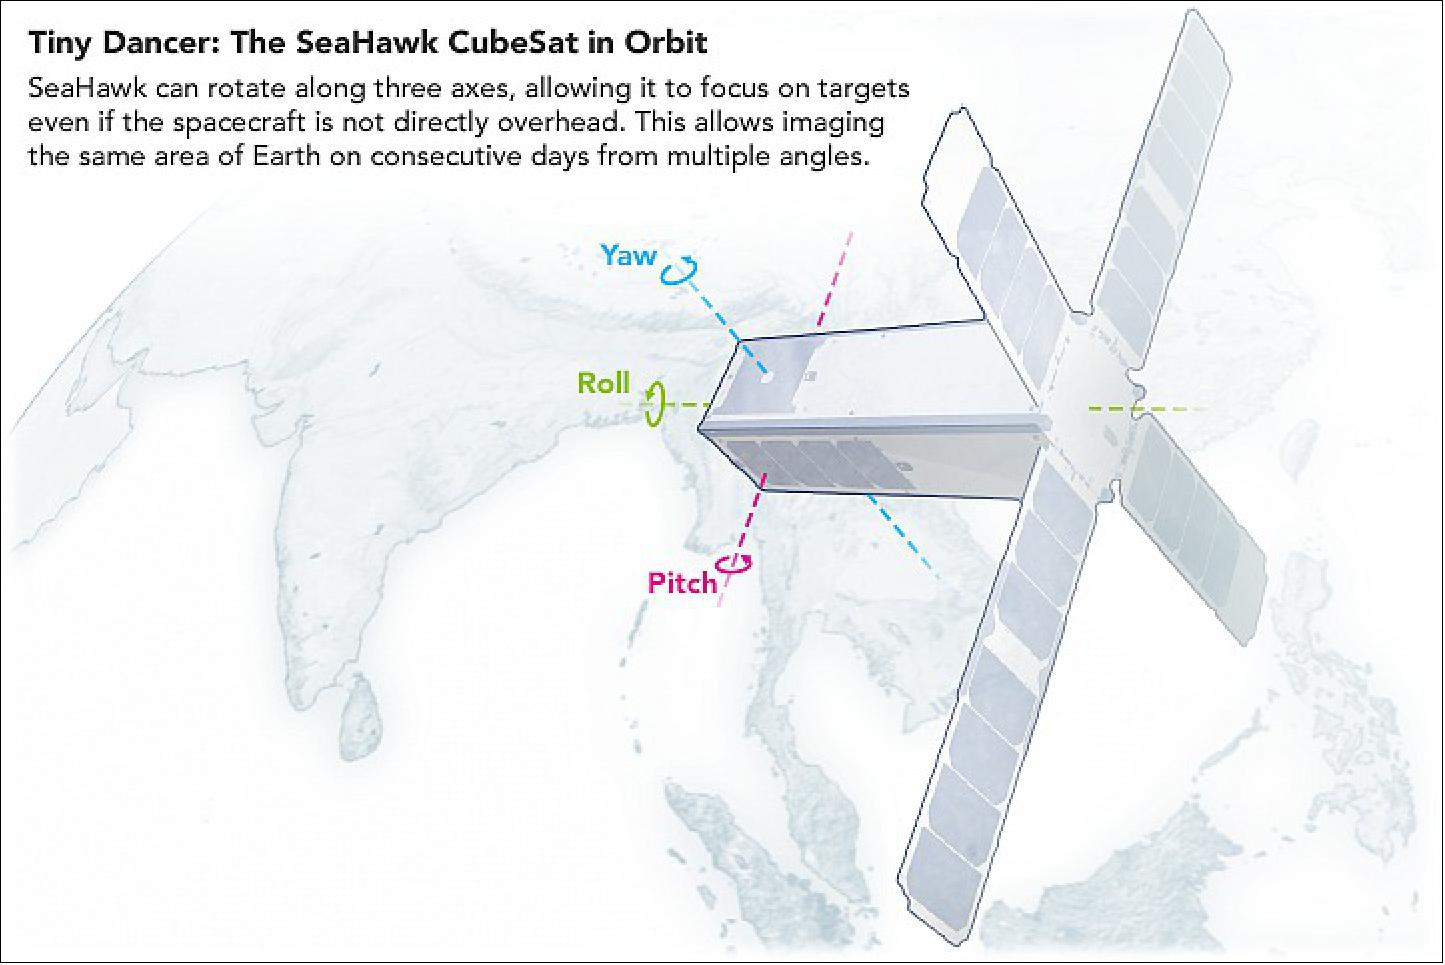 Figure 6: Tiny Dancer: The SeaHawk CubeSat in Orbit (image credit: SeaHawk project)